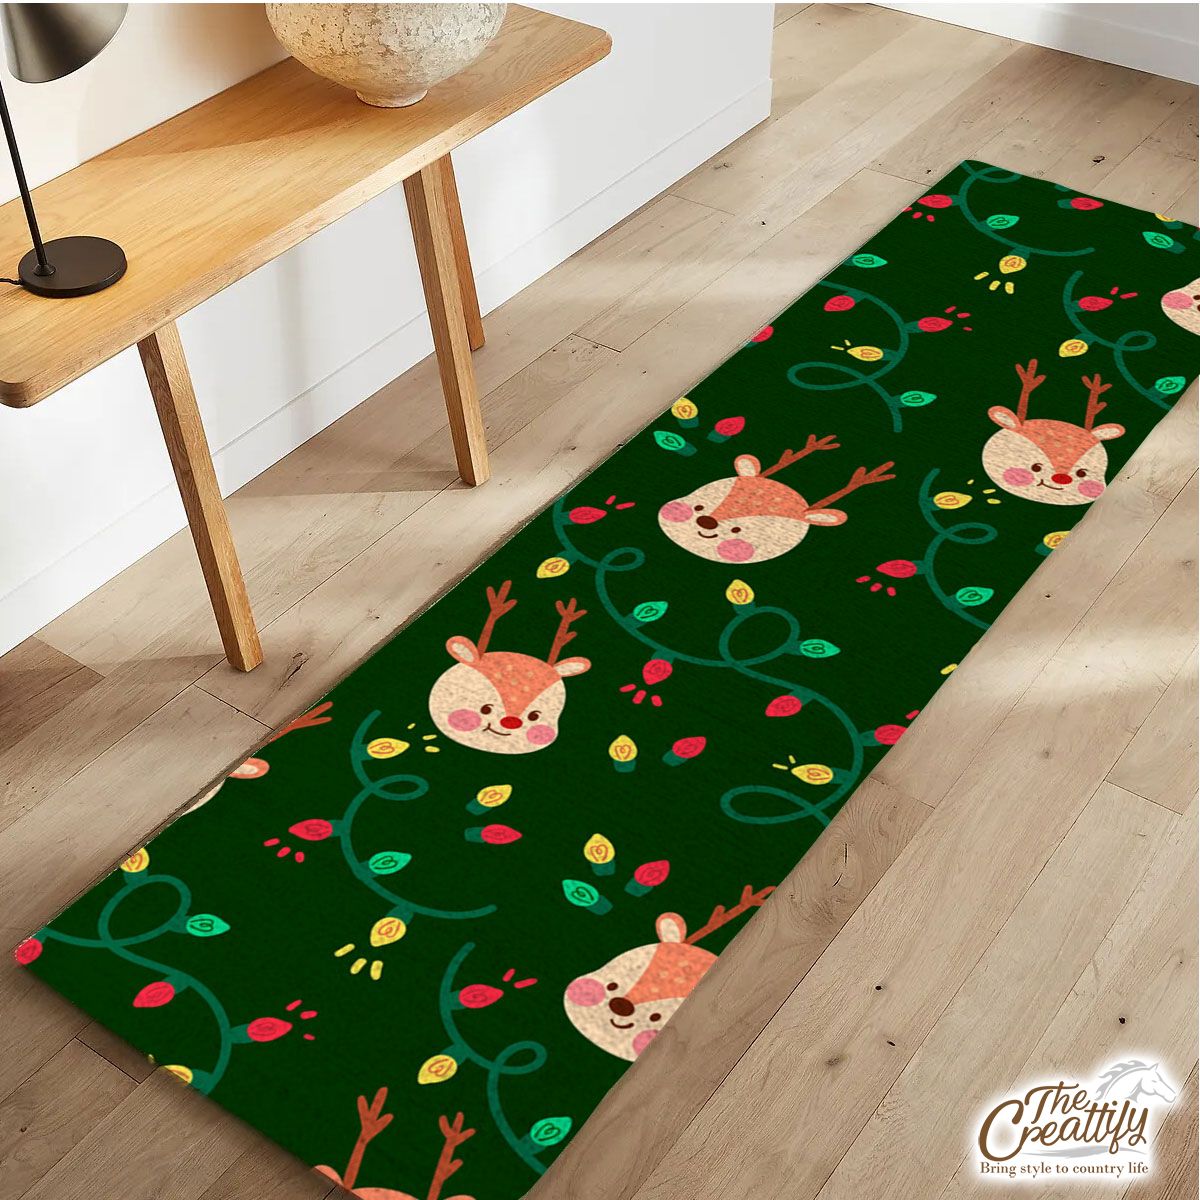 Reindeer With Christmas Light On Green Background Runner Carpet